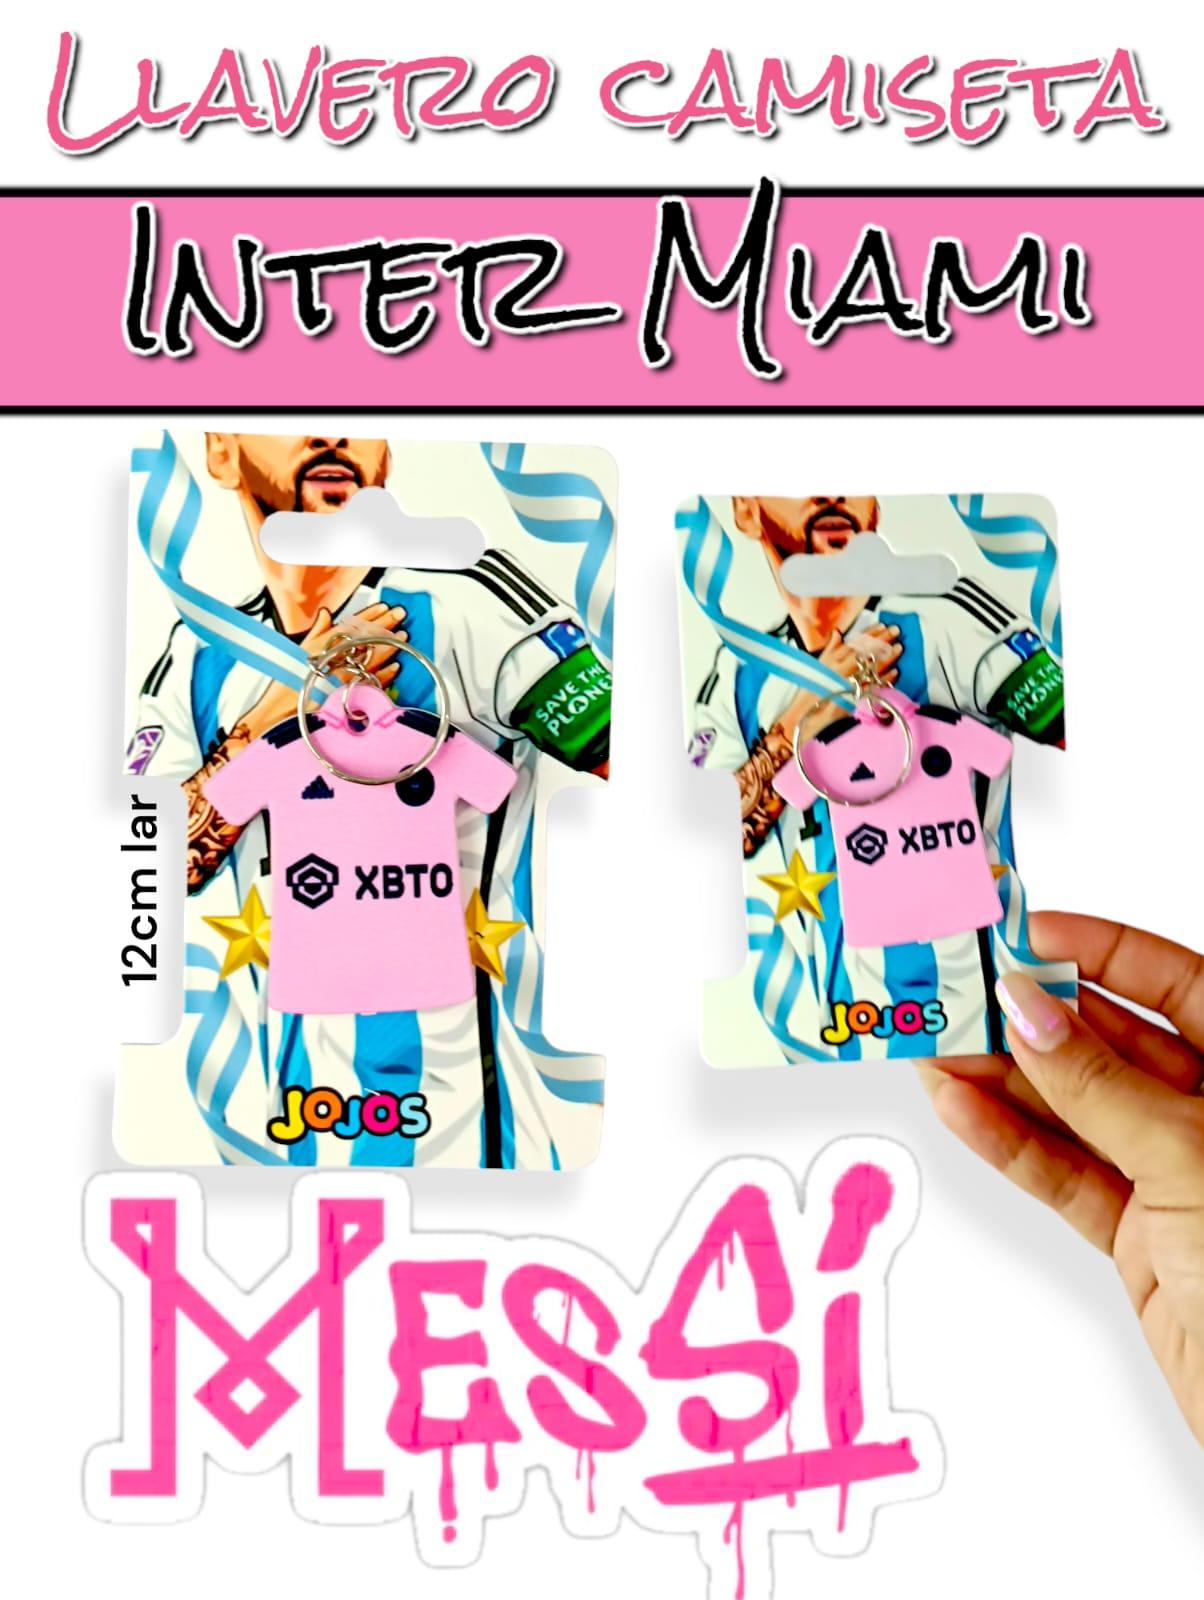 Llavero Camiseta Inter Miami Messi en Carton Exhibidor 